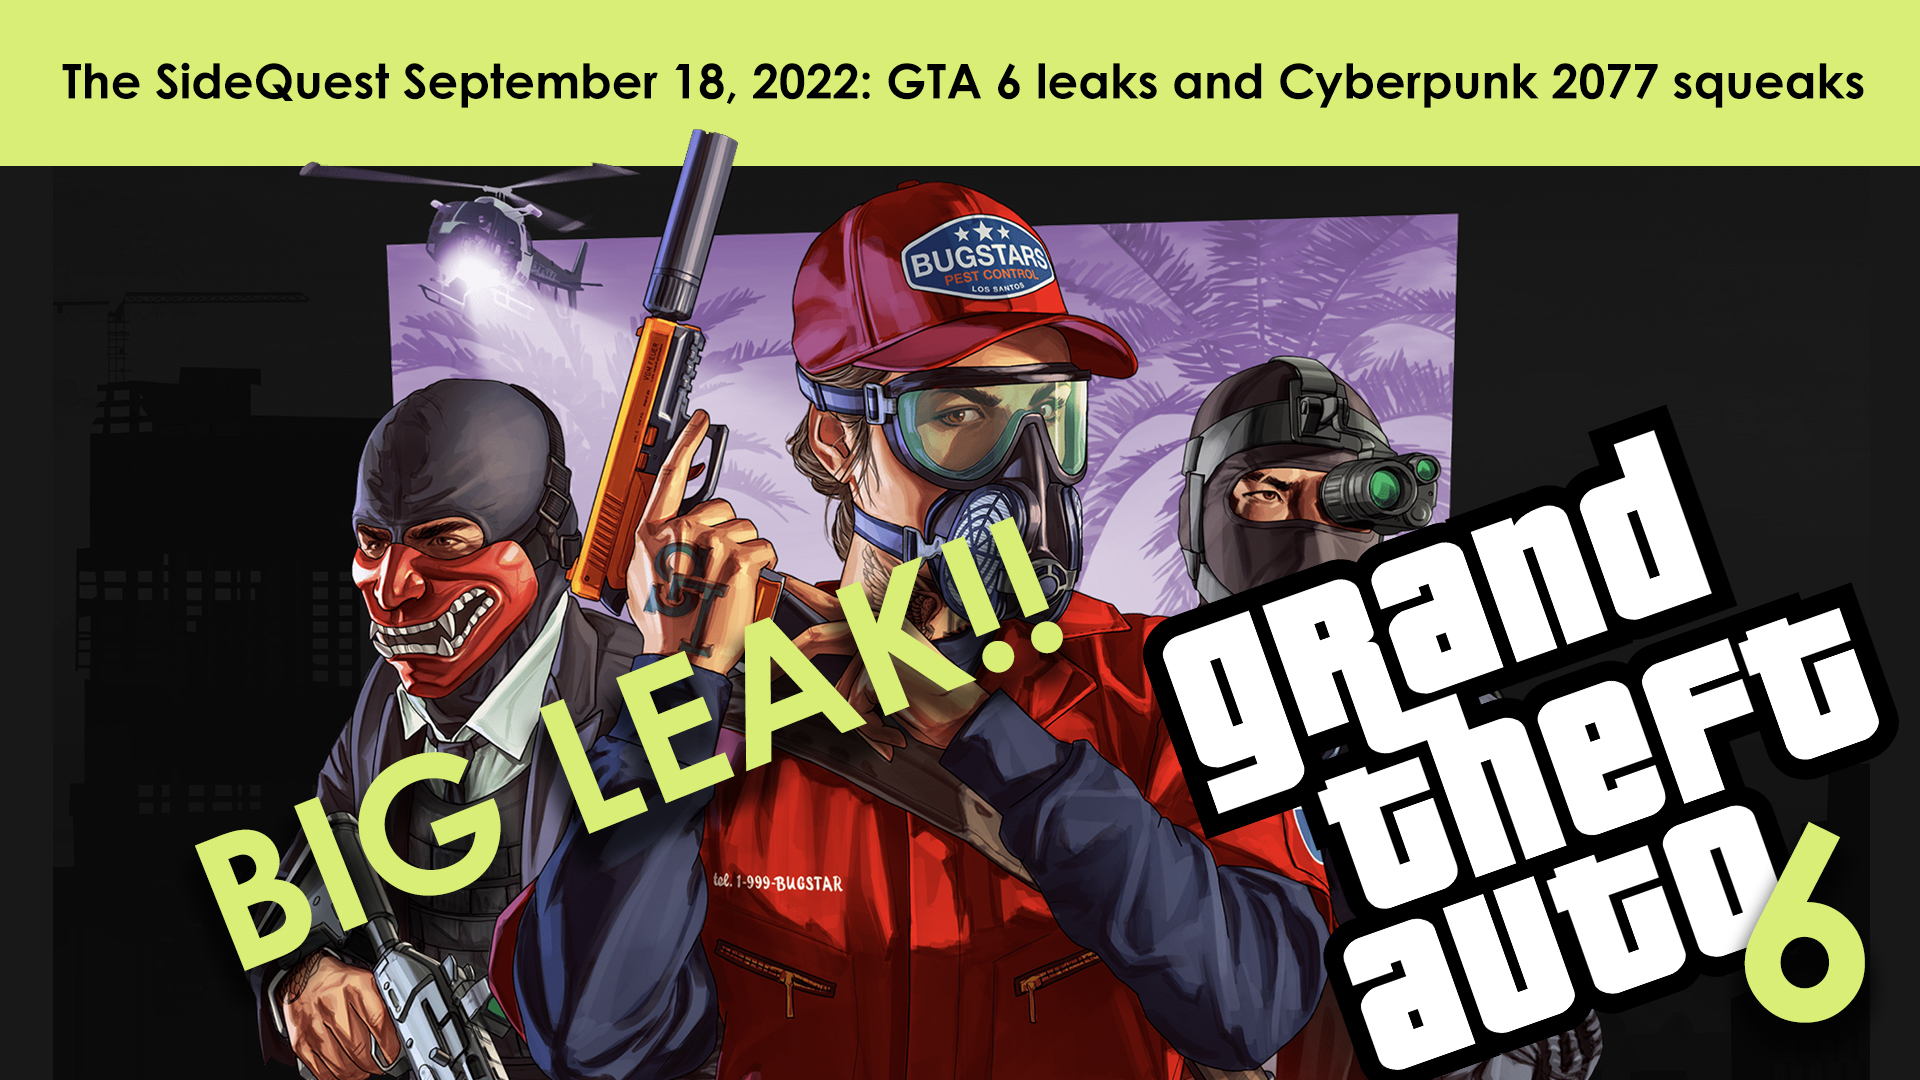 GTA 6 Leak - WHAT Happened In 2022? 